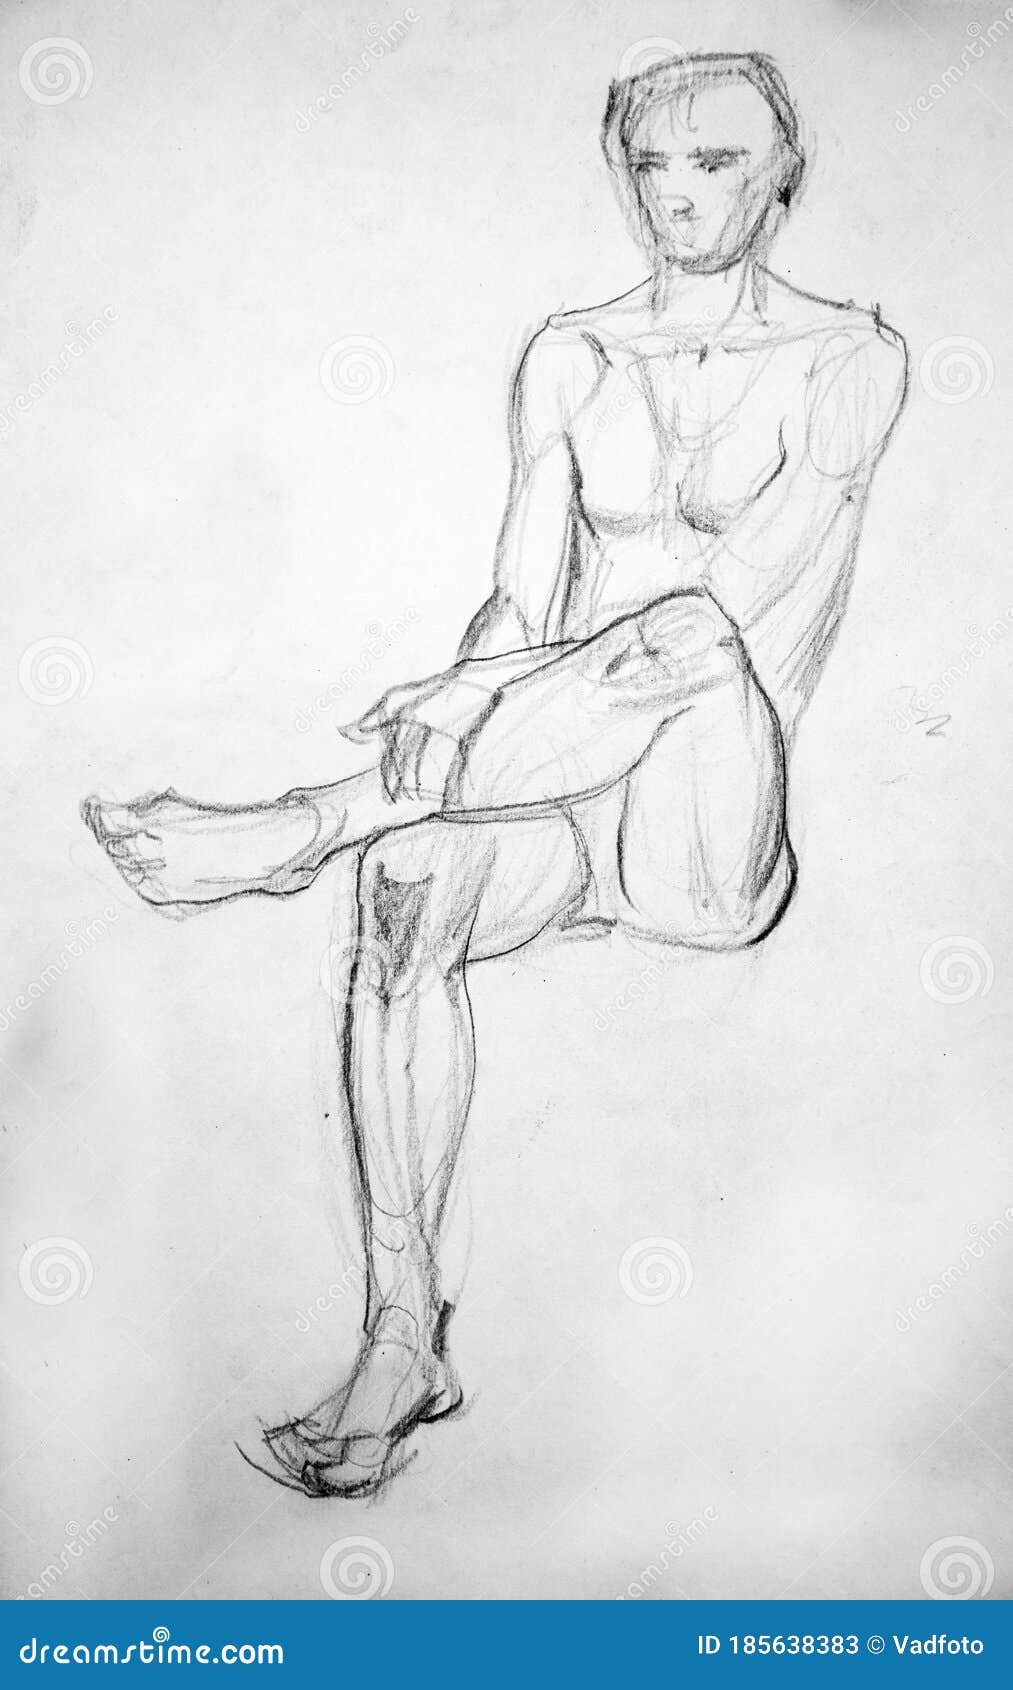 Human`s Figure Pencil Drawing Illustration Sketch Stock Image Image